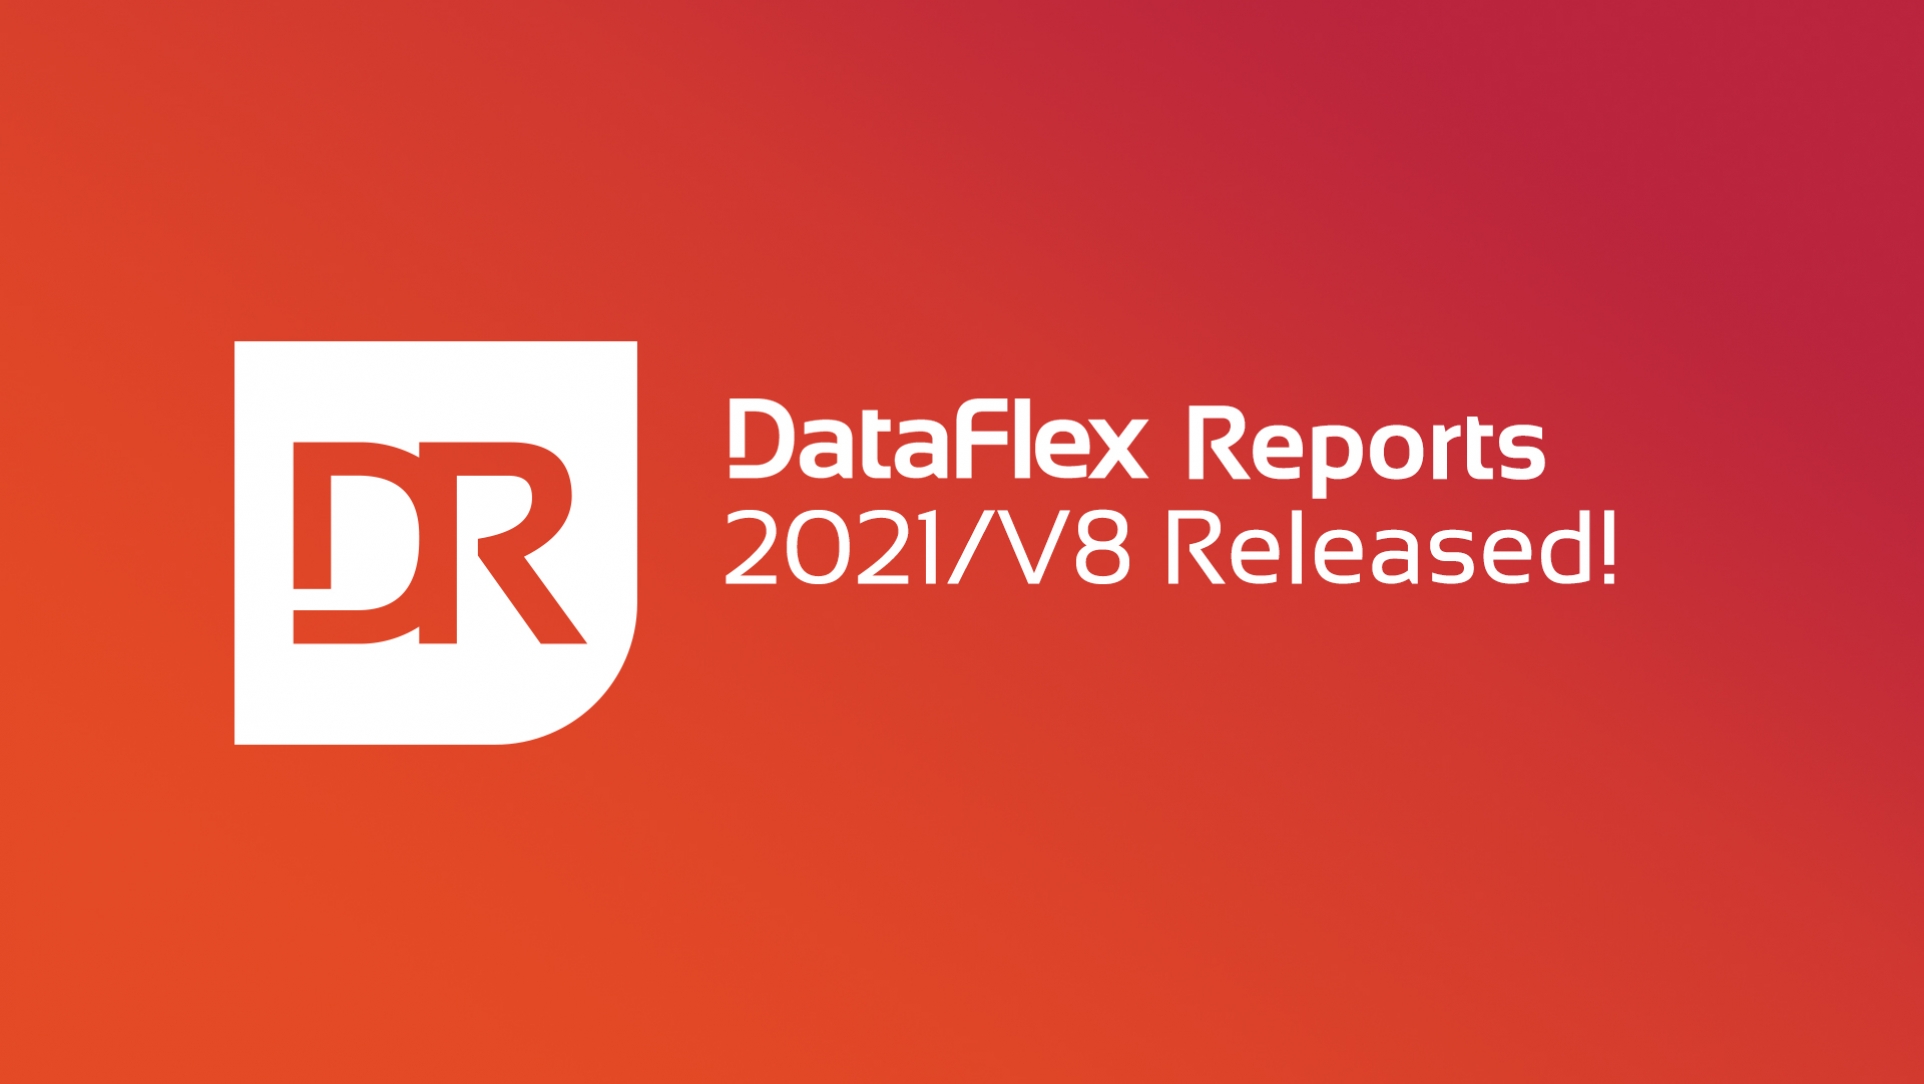 DataFlex Reports Released!